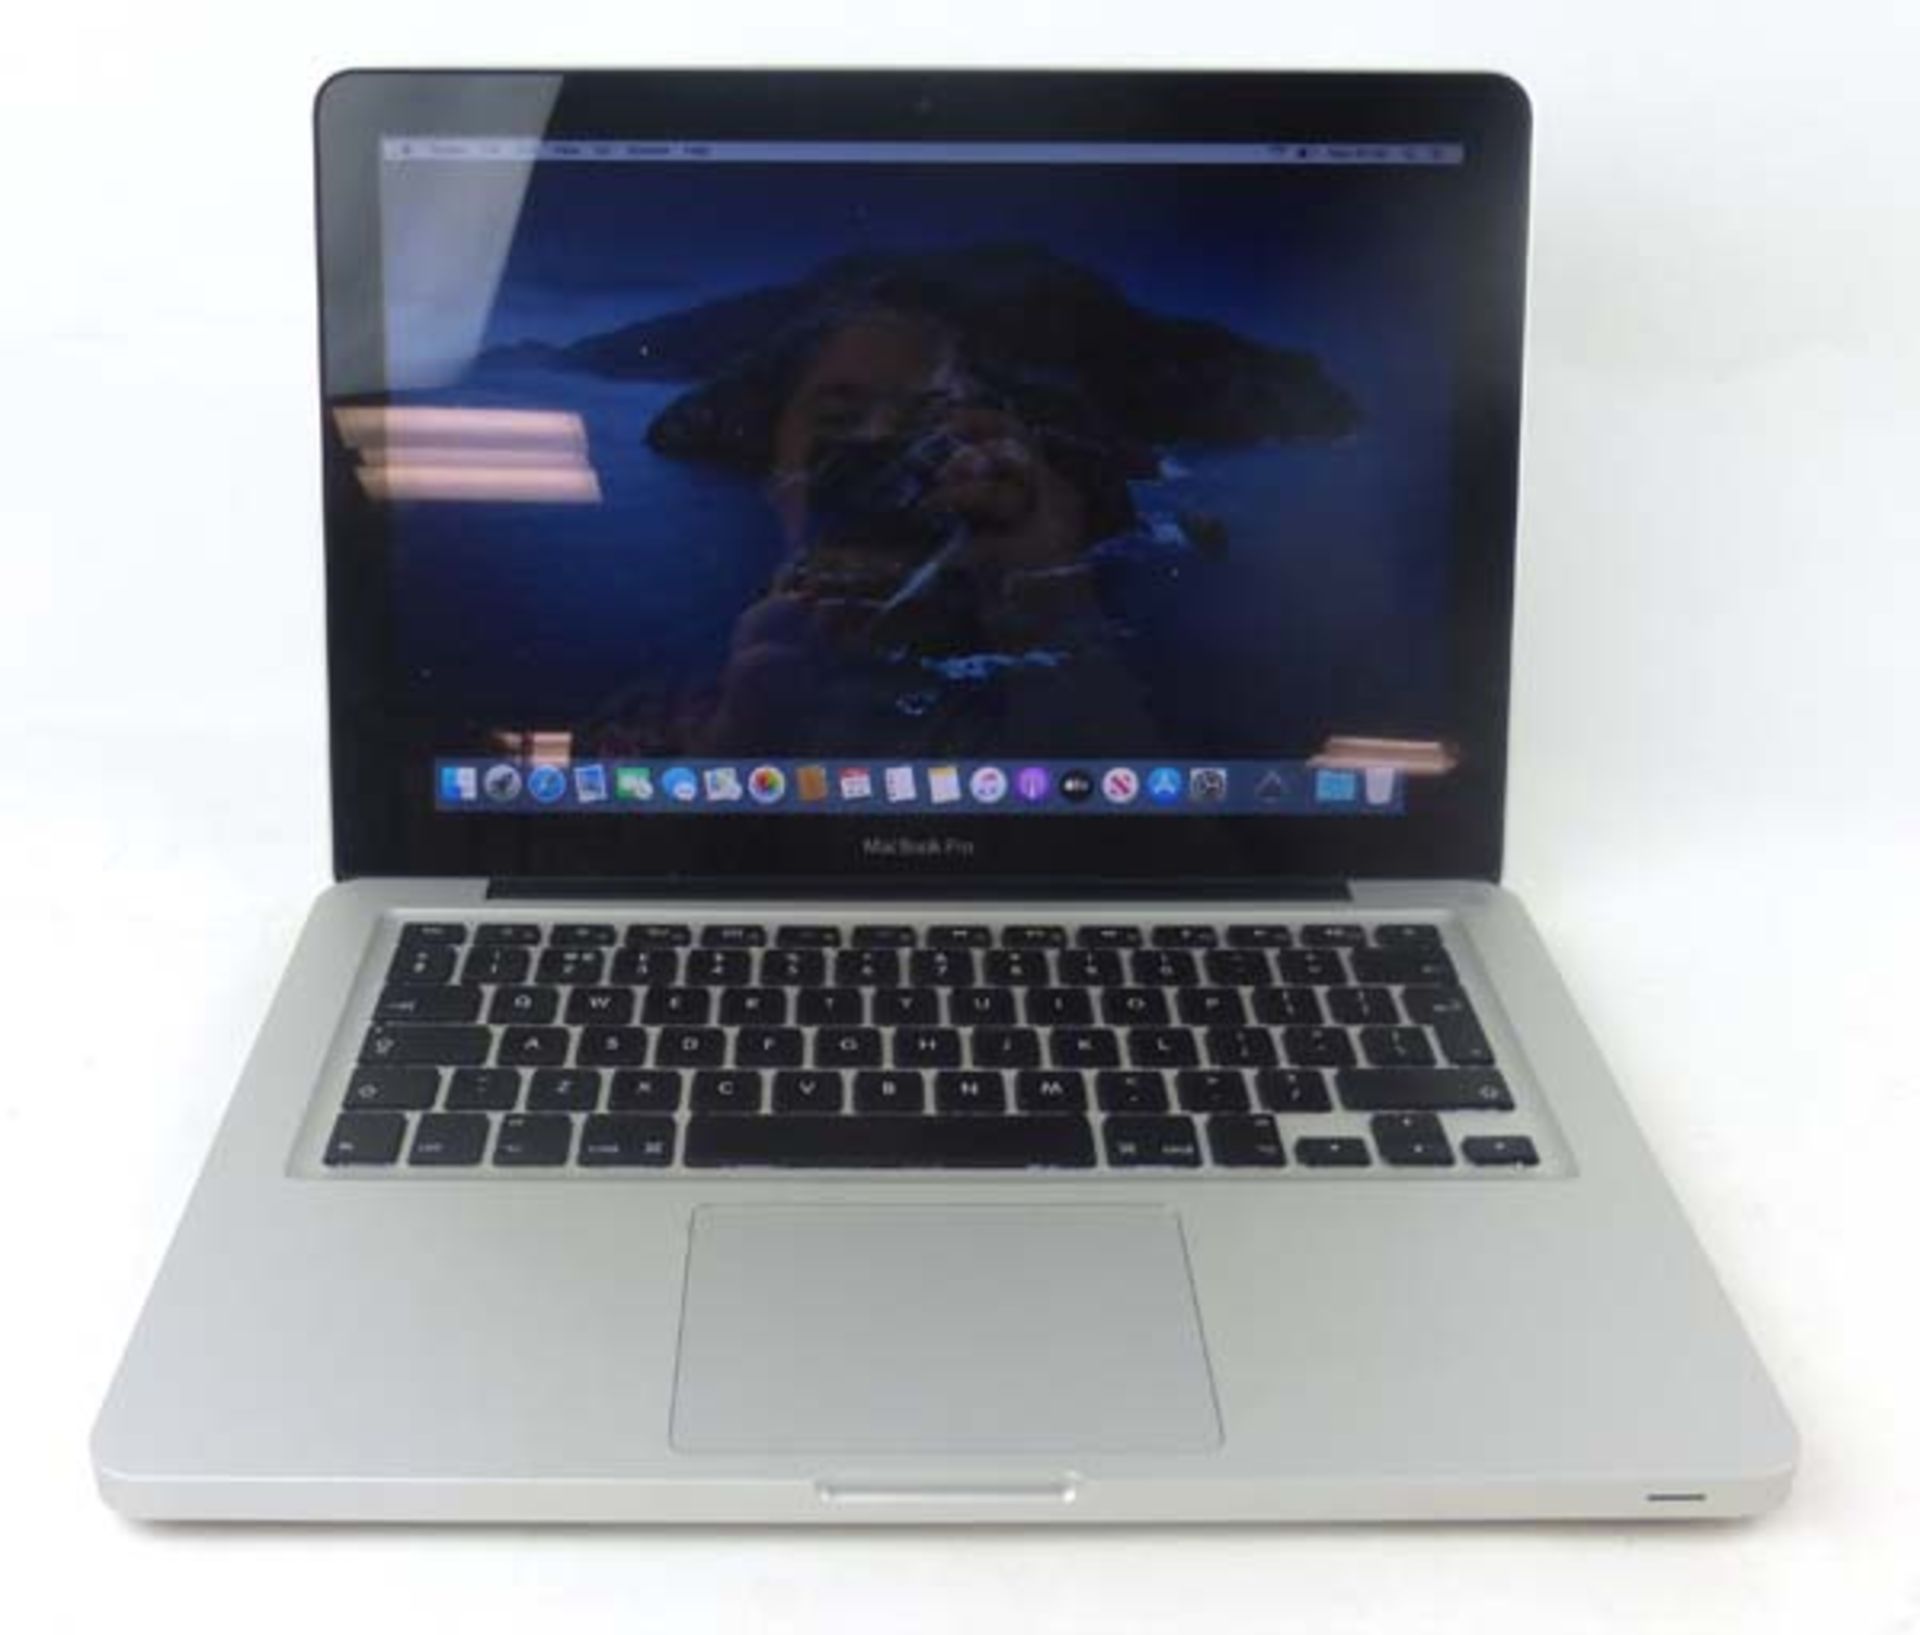 MacBook Pro 13.3'' Intel i5 @ 2.5GHz, 500GB HDD, 4GB RAM, OS Catalina laptop with PSU (Model